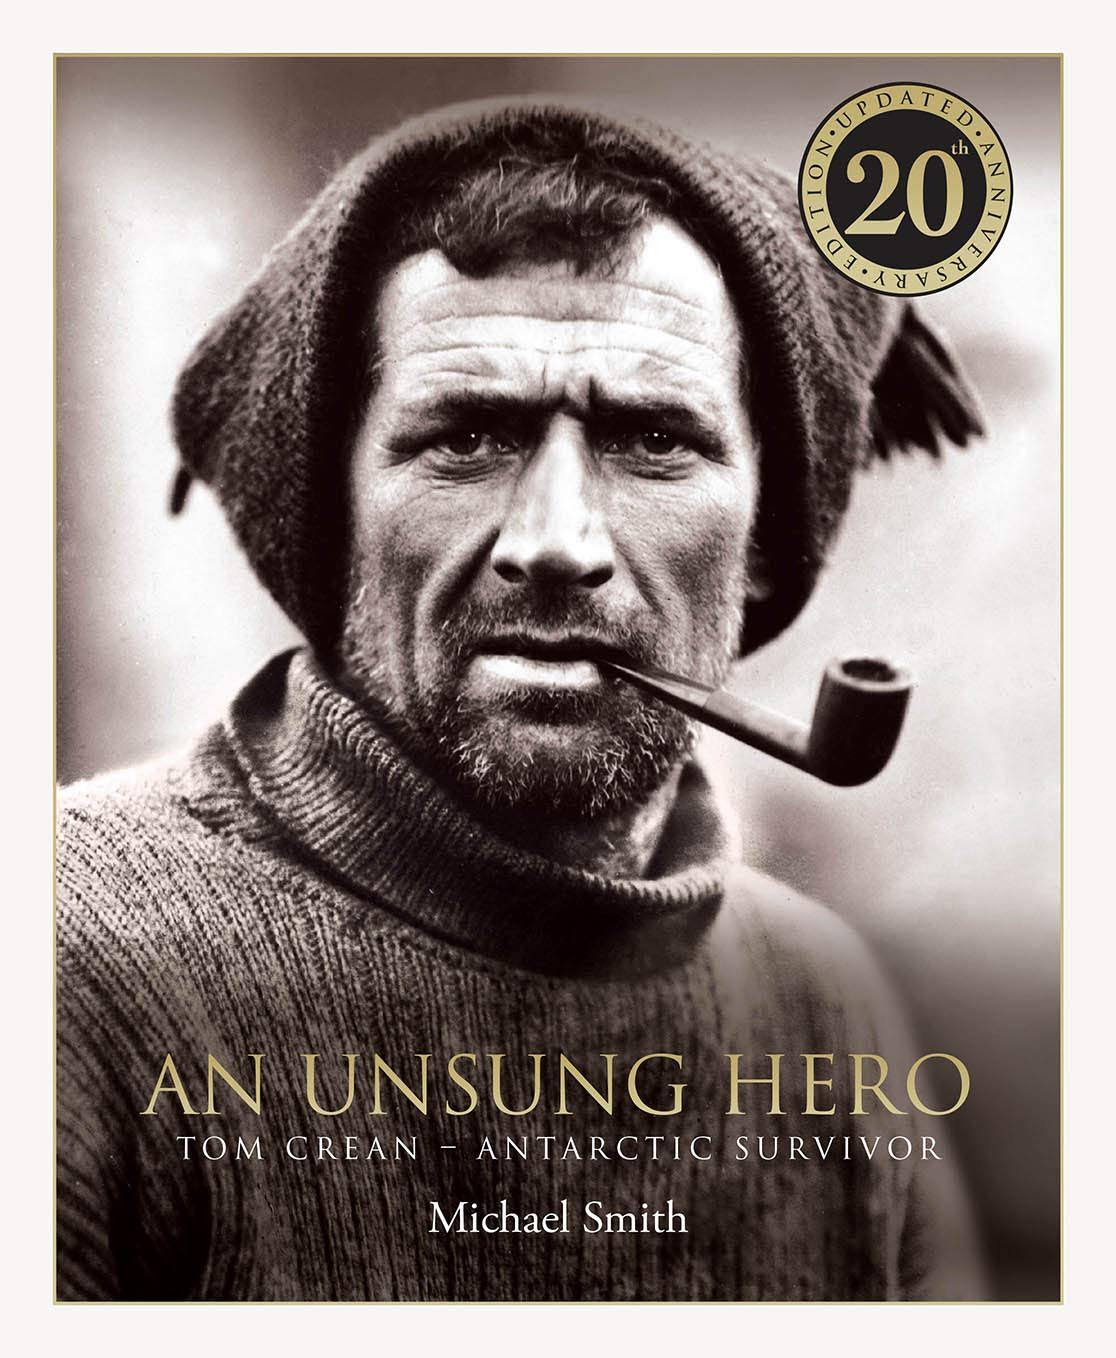 An Unsung Hero: Tom Crean: Antarctic Survivor - 20th Anniversary Illustrated Edition [Book]